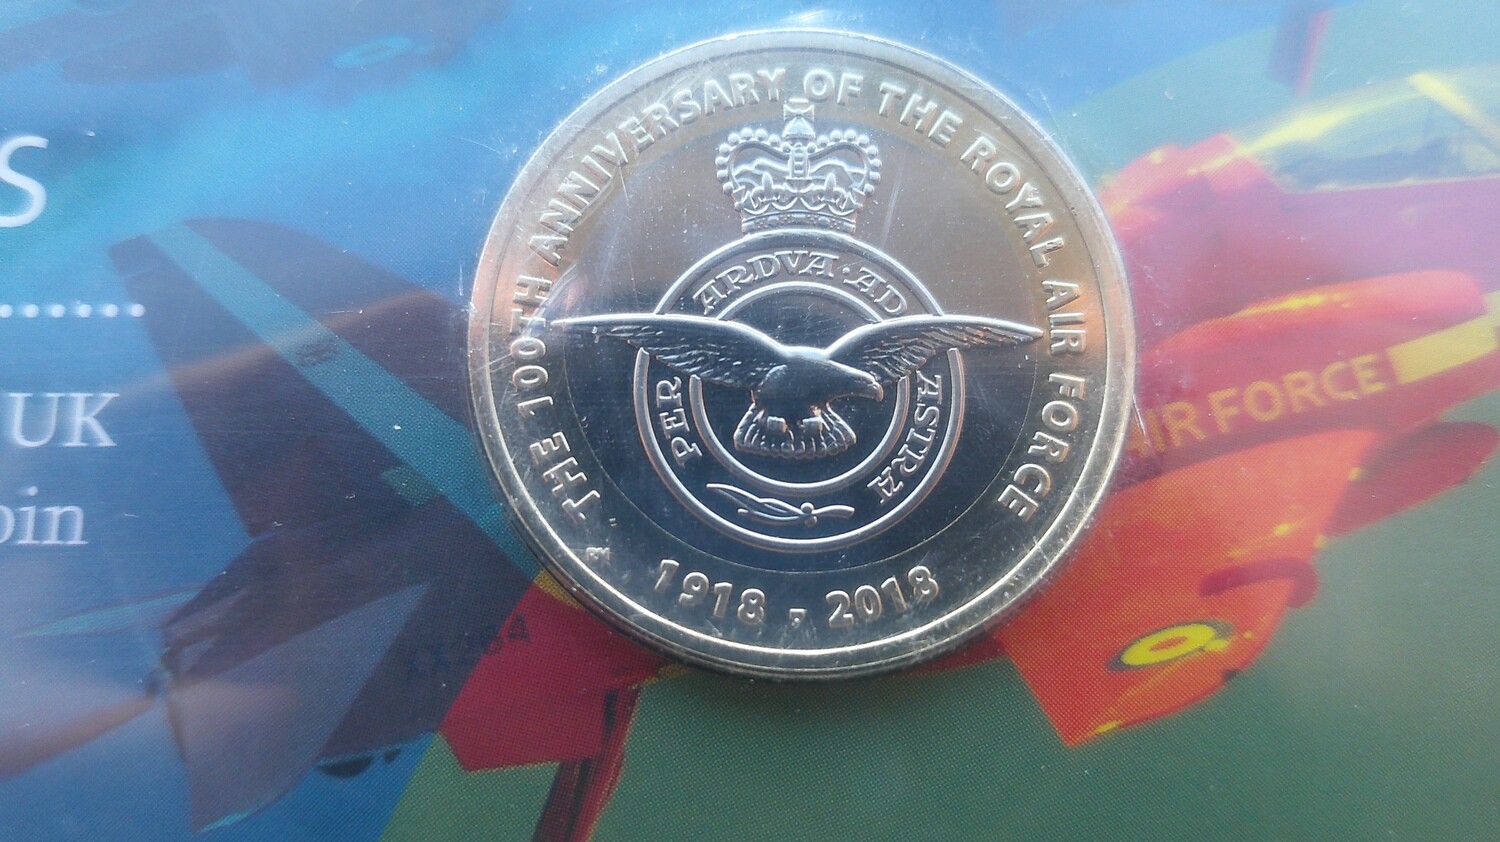 2018 - Two Pound (RAF Centenary Badge)